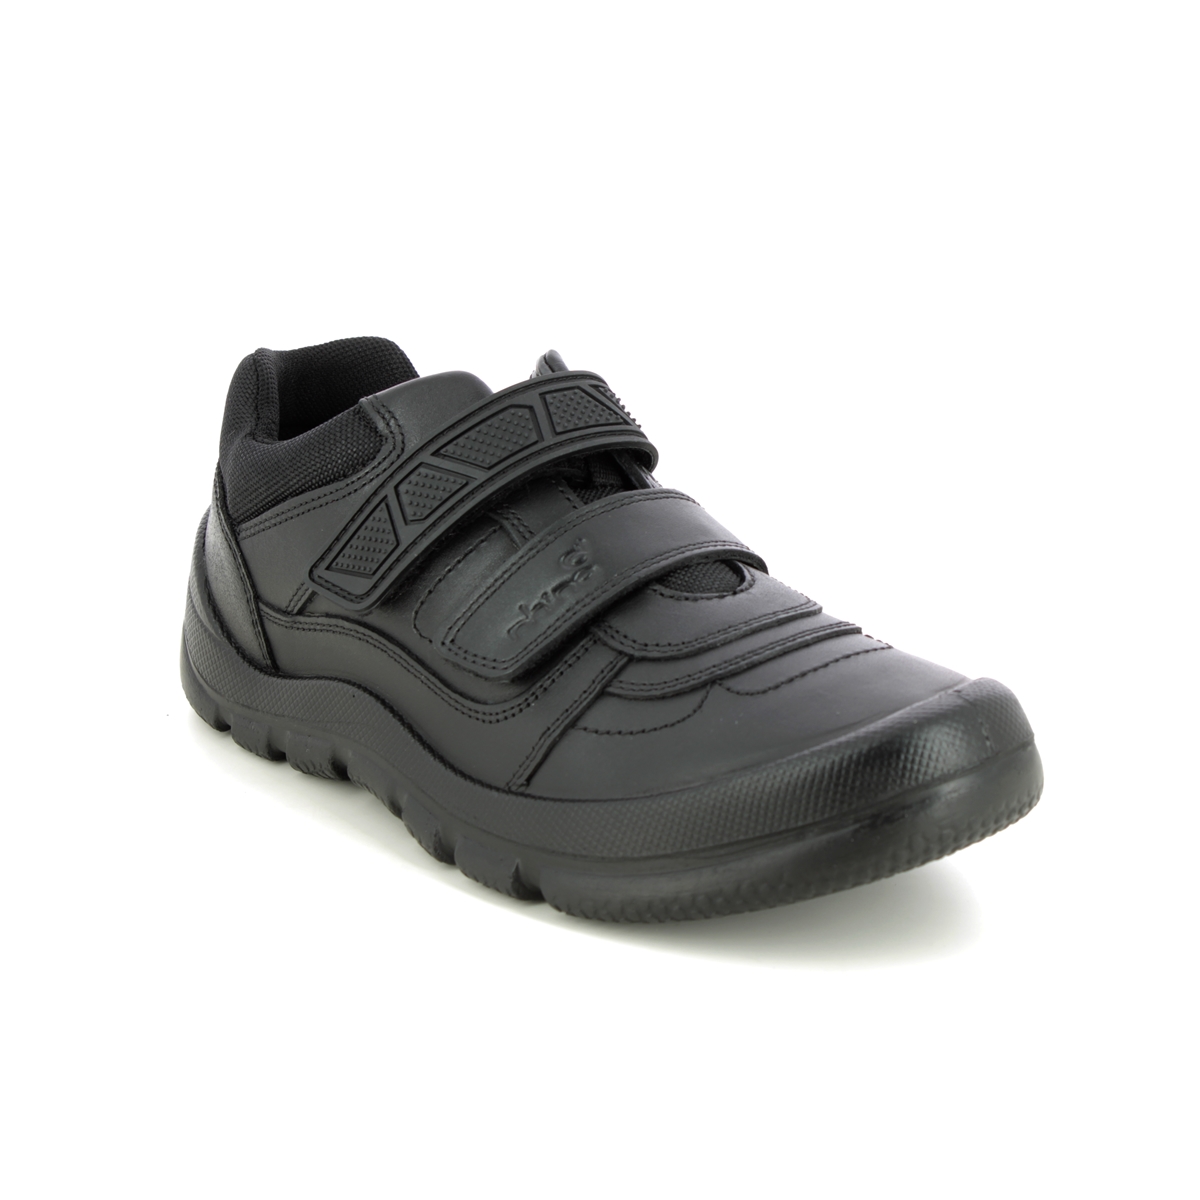 Start Rite - Rhino Warrior In Black Leather 8237-76F In Size 2.5 In Plain Black Leather For School Boys Shoes  In Black Leather For kids